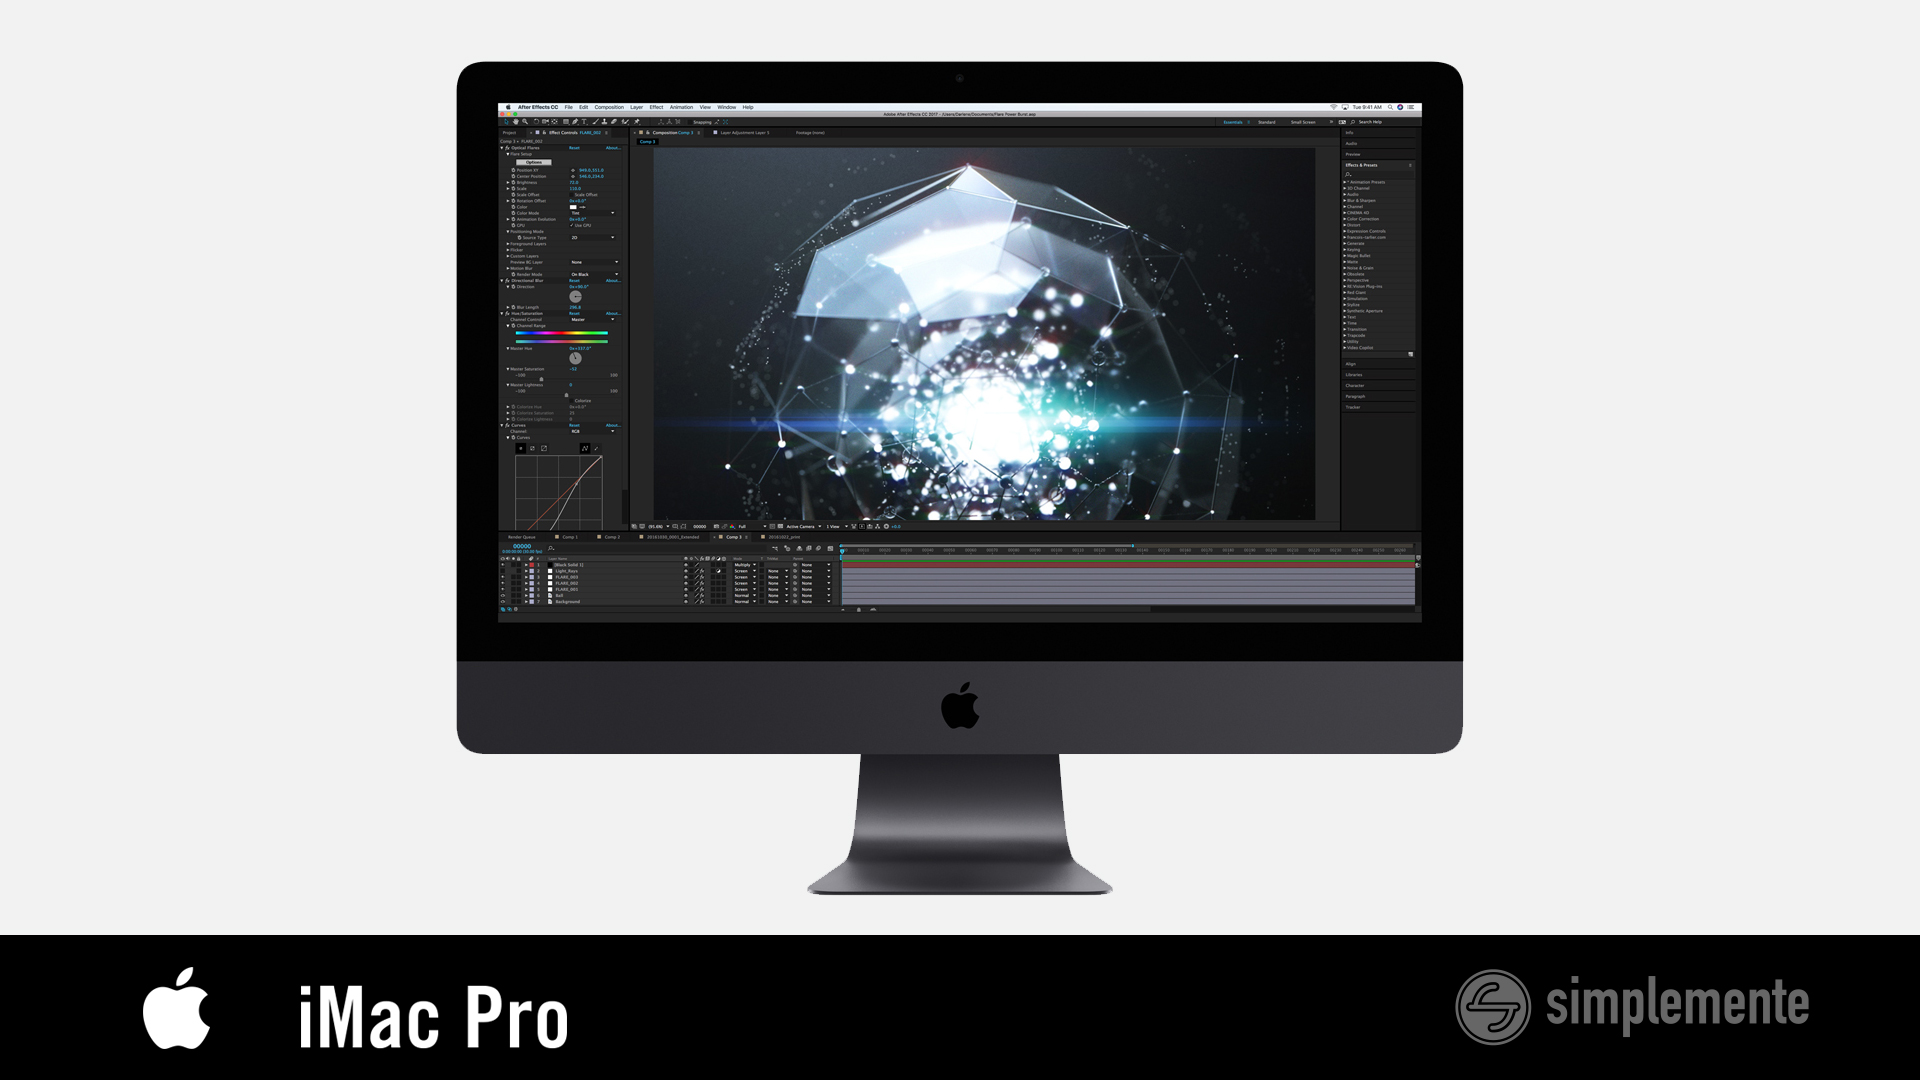 Llega la nueva iMac Pro de Apple